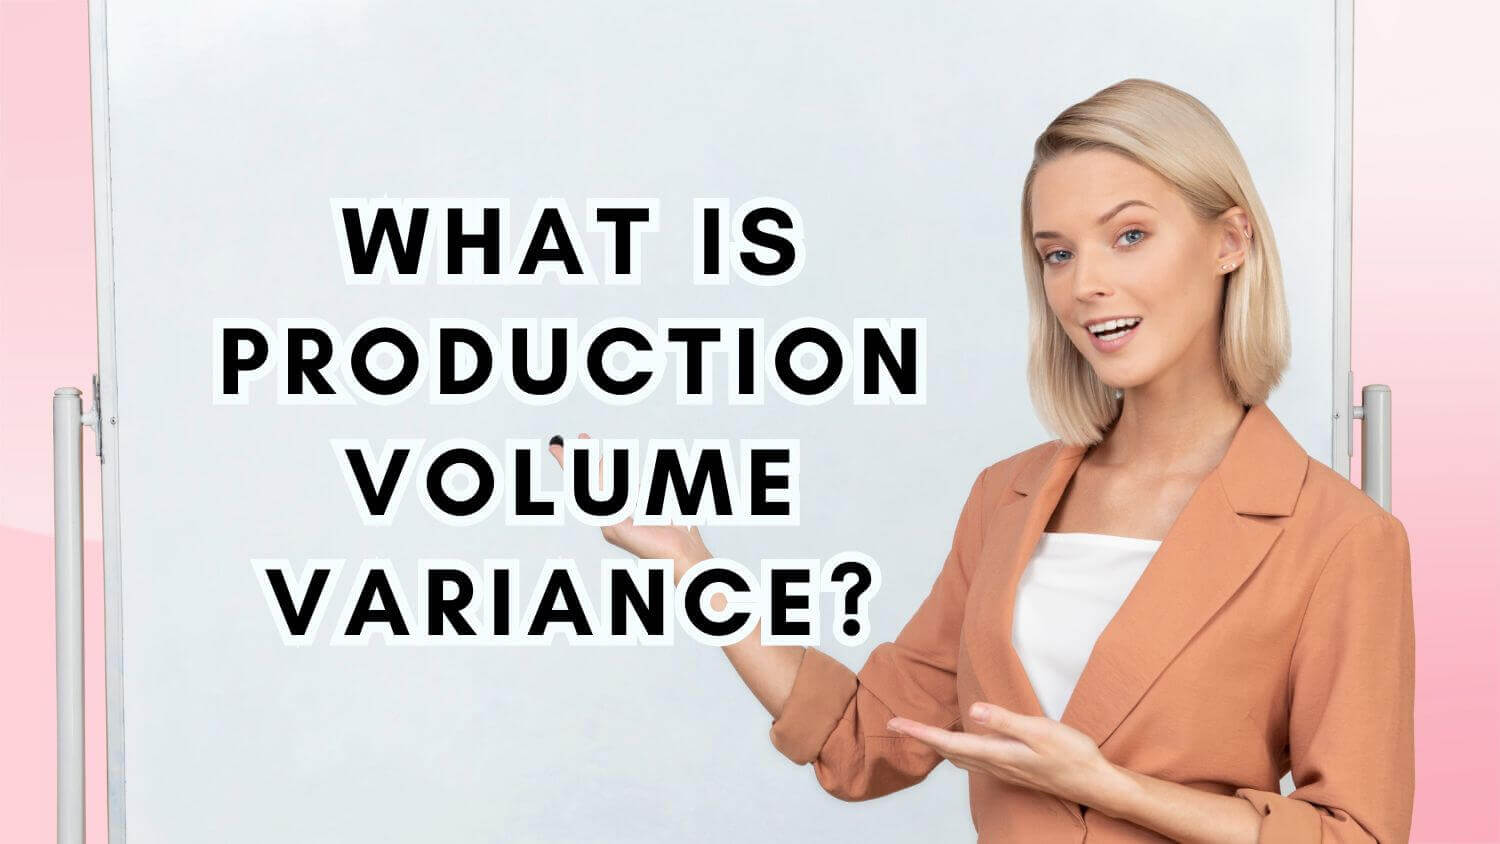 production volume variance